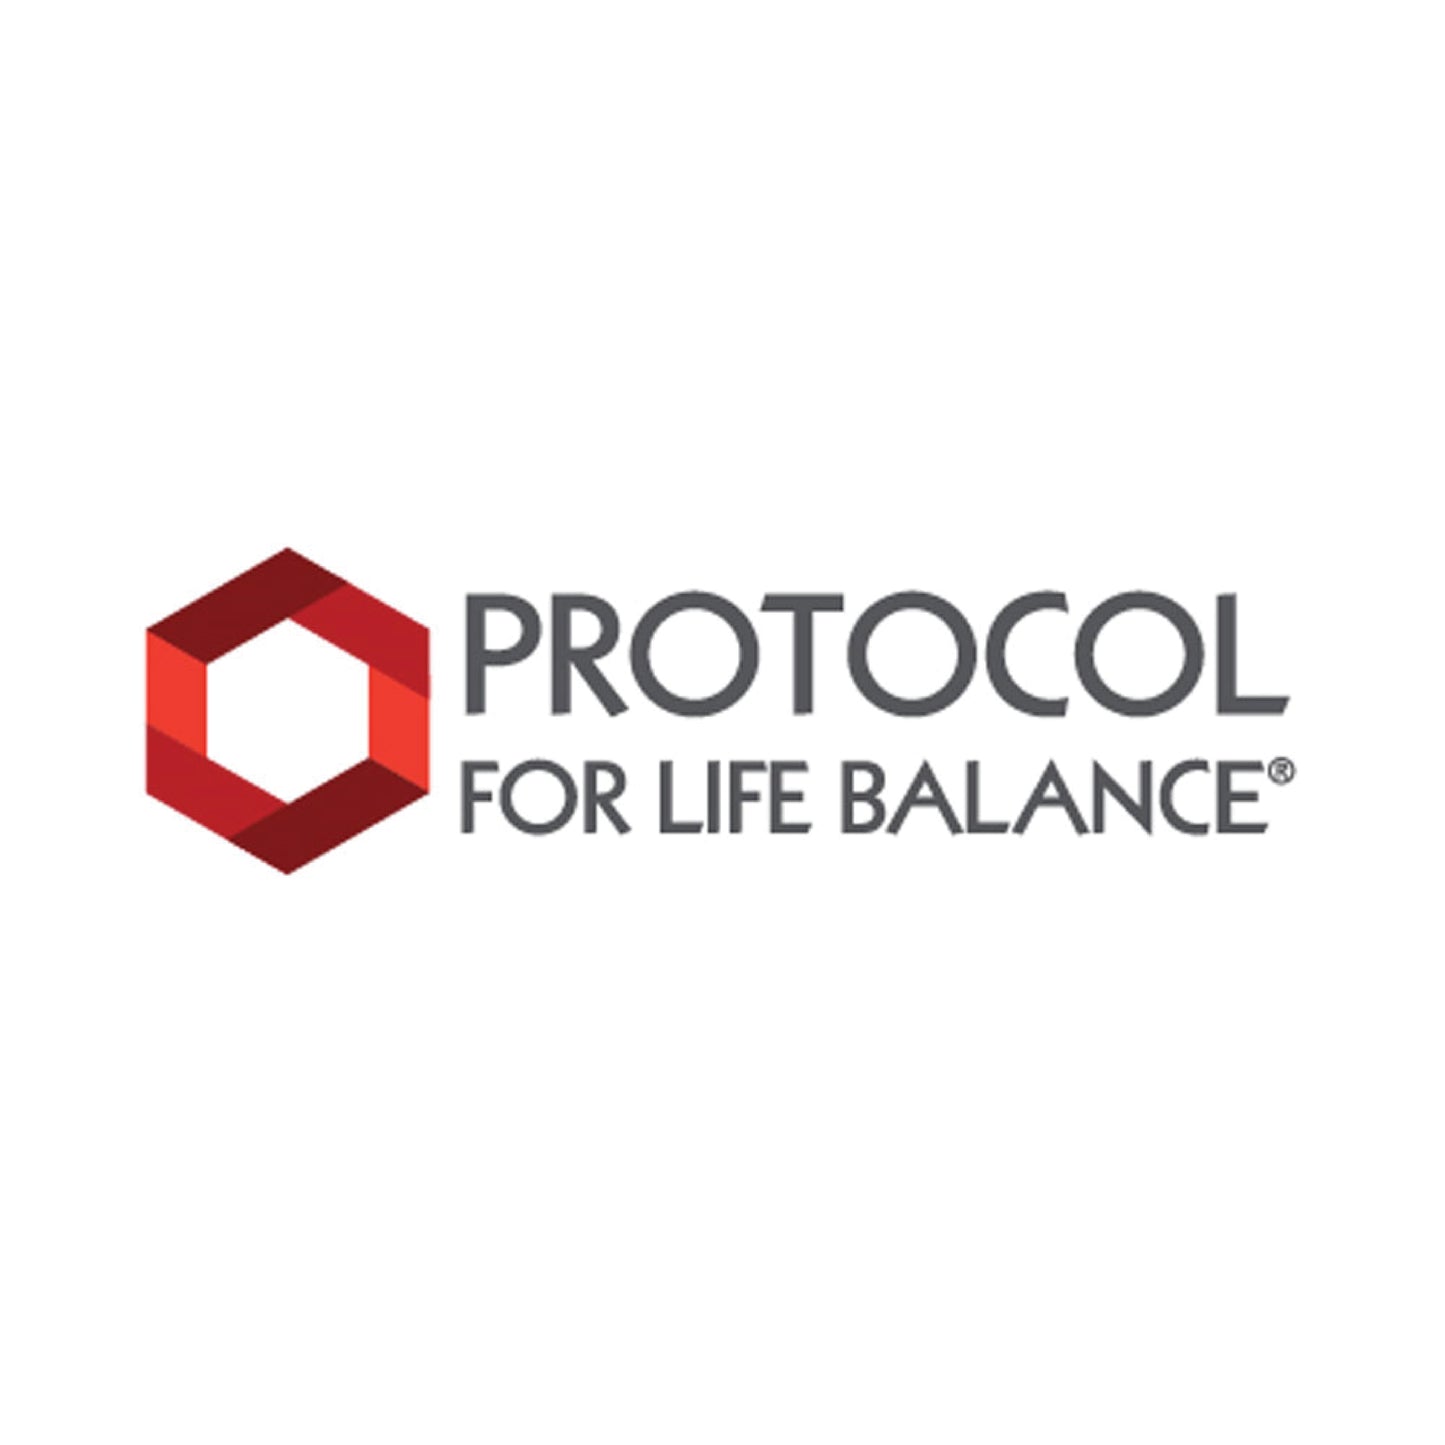 Protocol for Life Balance, Omega 3-6-9, 100 Softgels